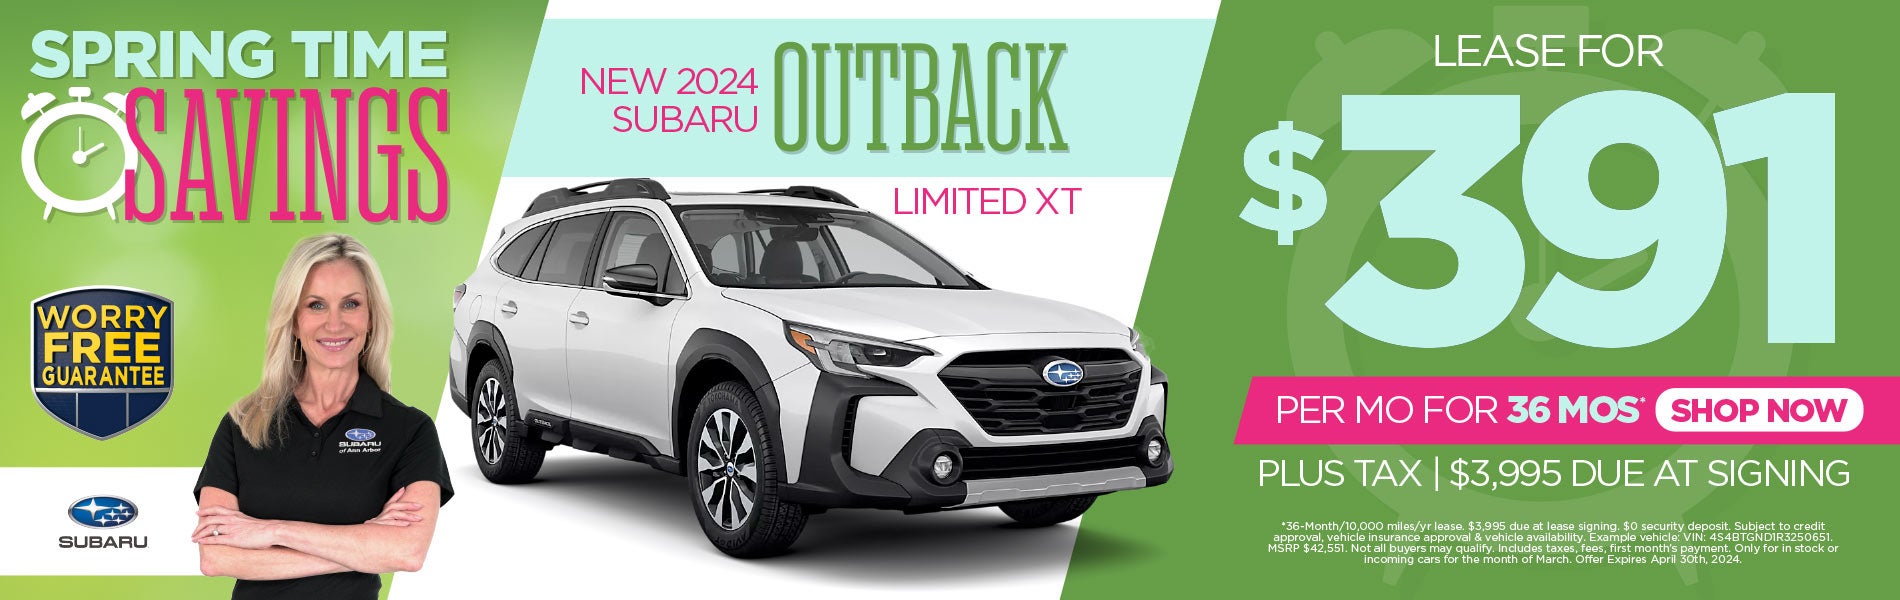 New 2024 Subaru Outback LMTD XT lease for $391/Mo*